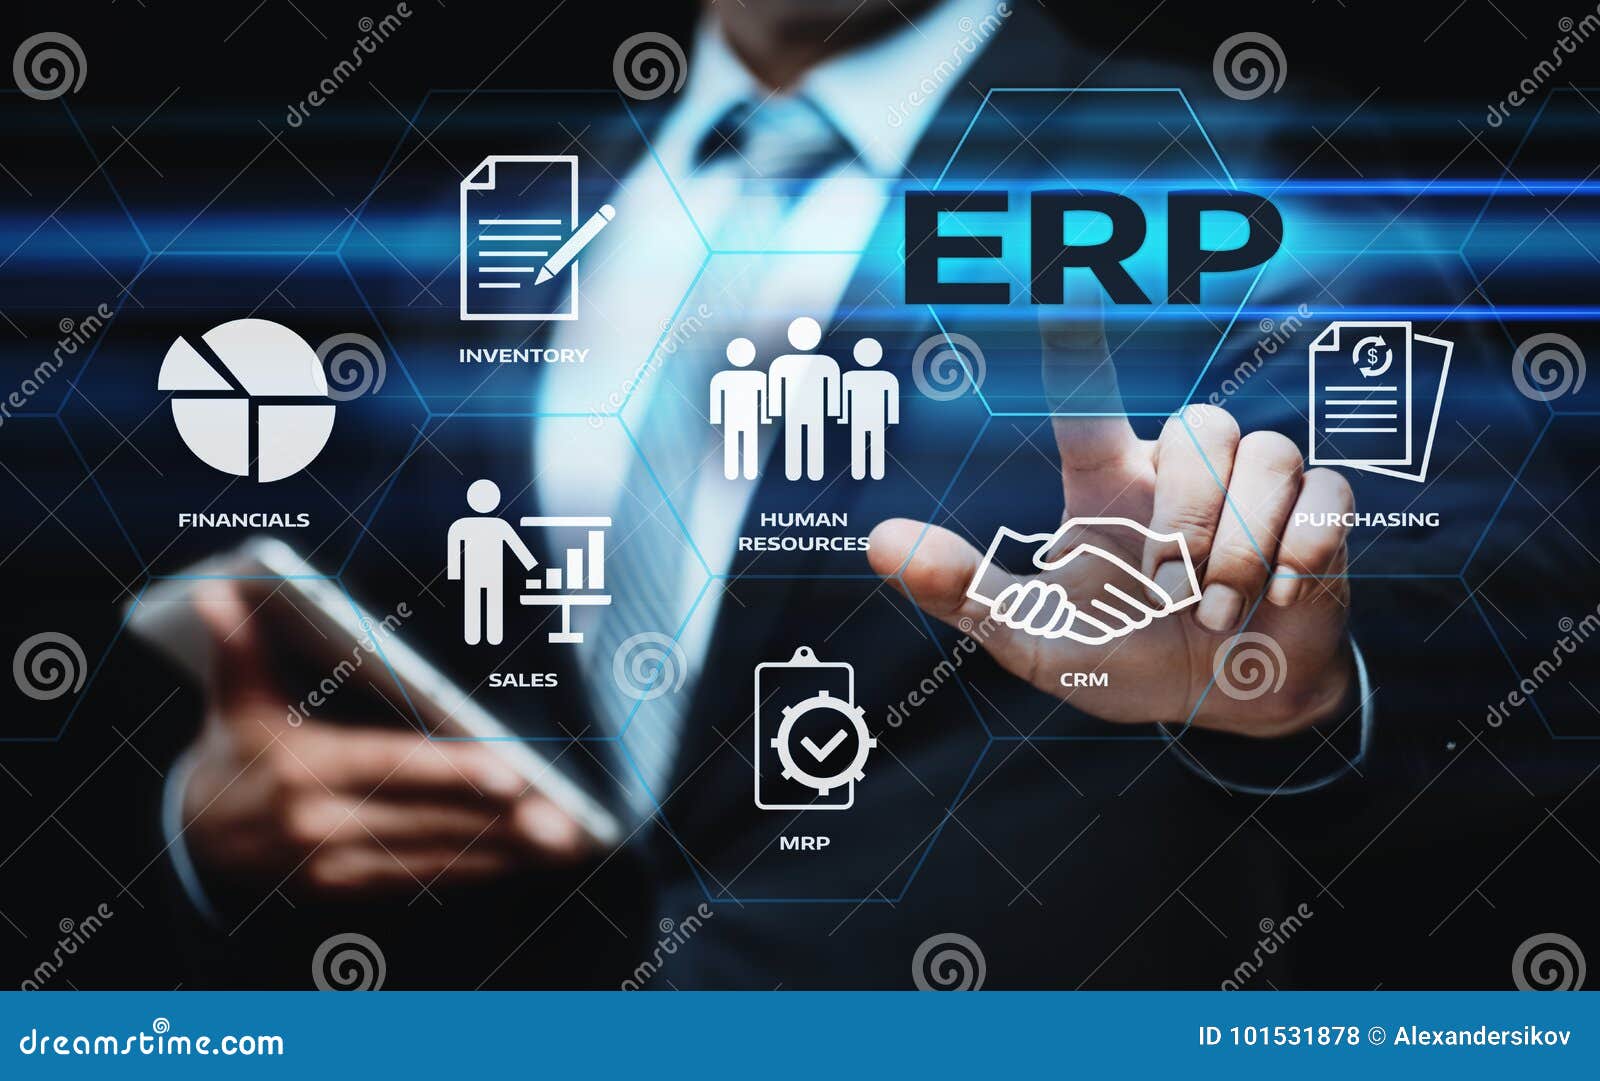 enterprise resource planning erp corporate company management business internet technology concept